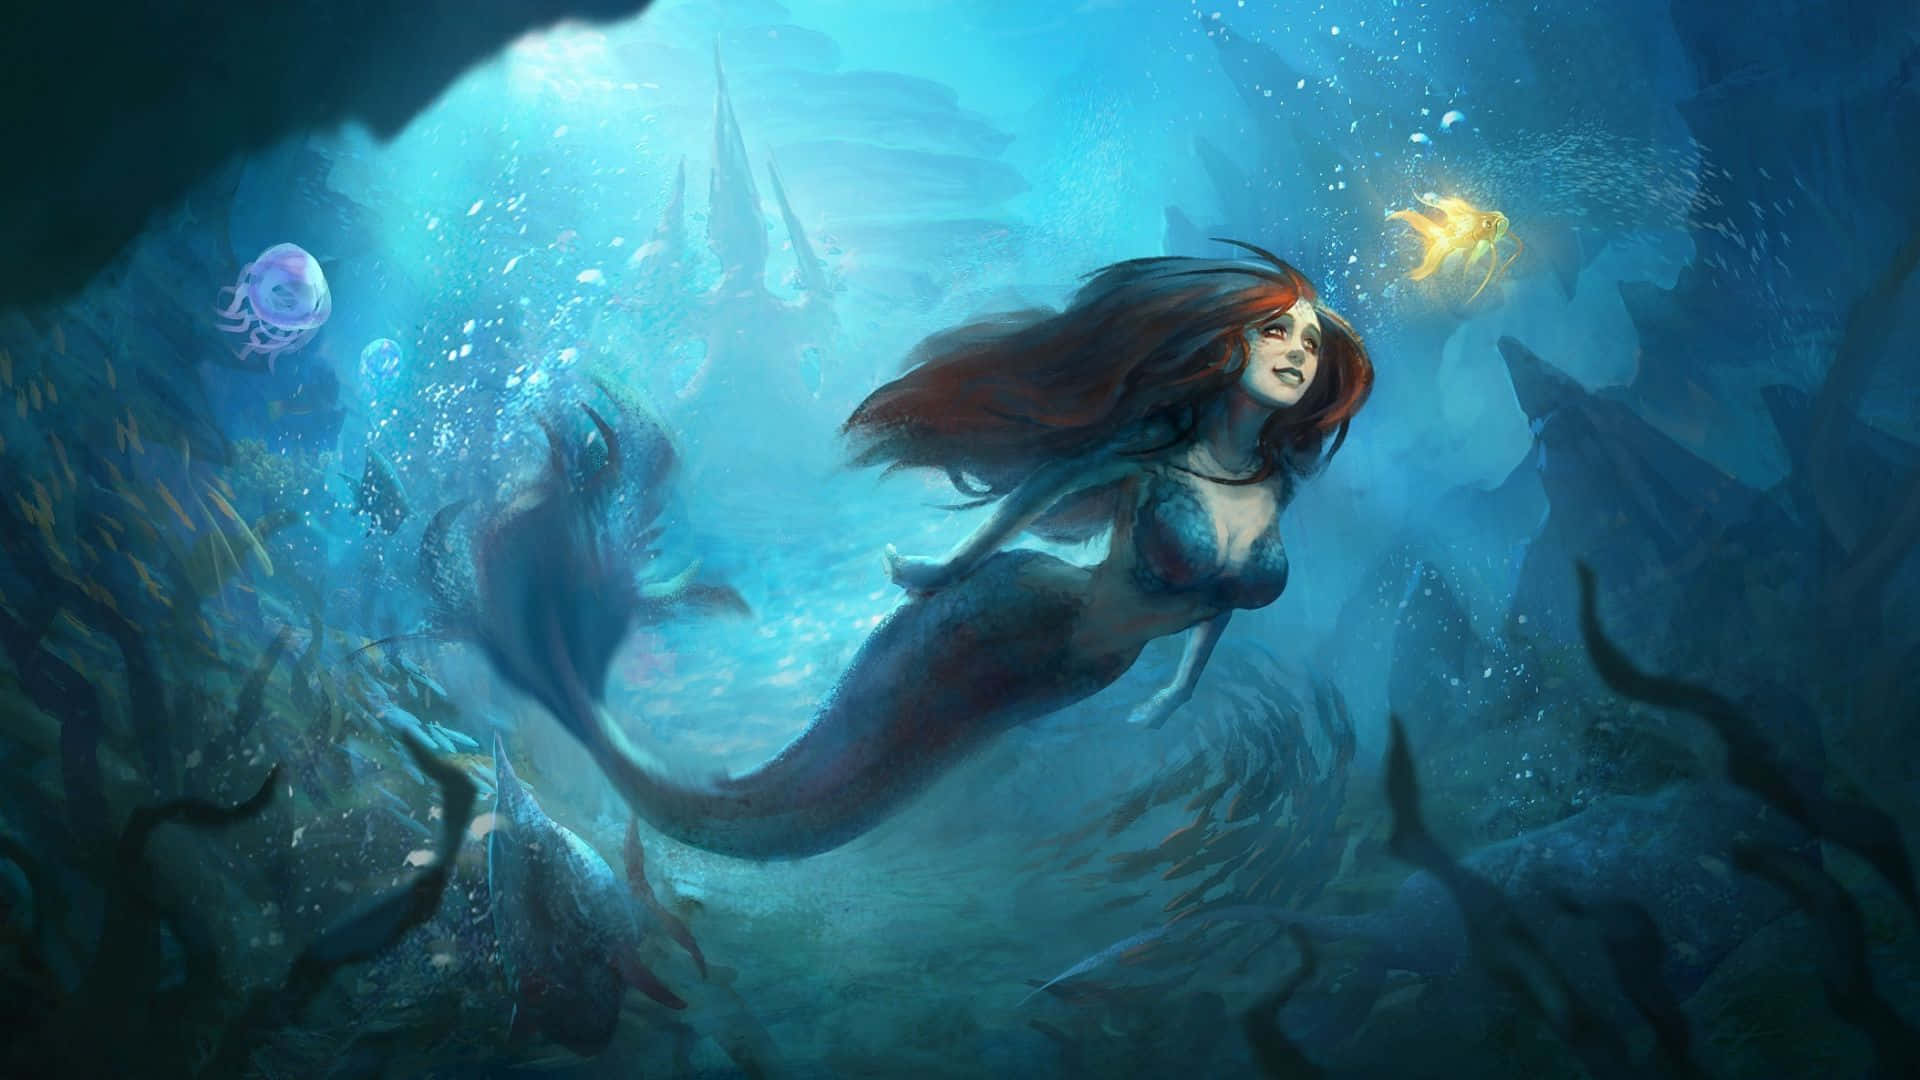 A beautiful mermaid in an enchanted underwater world.